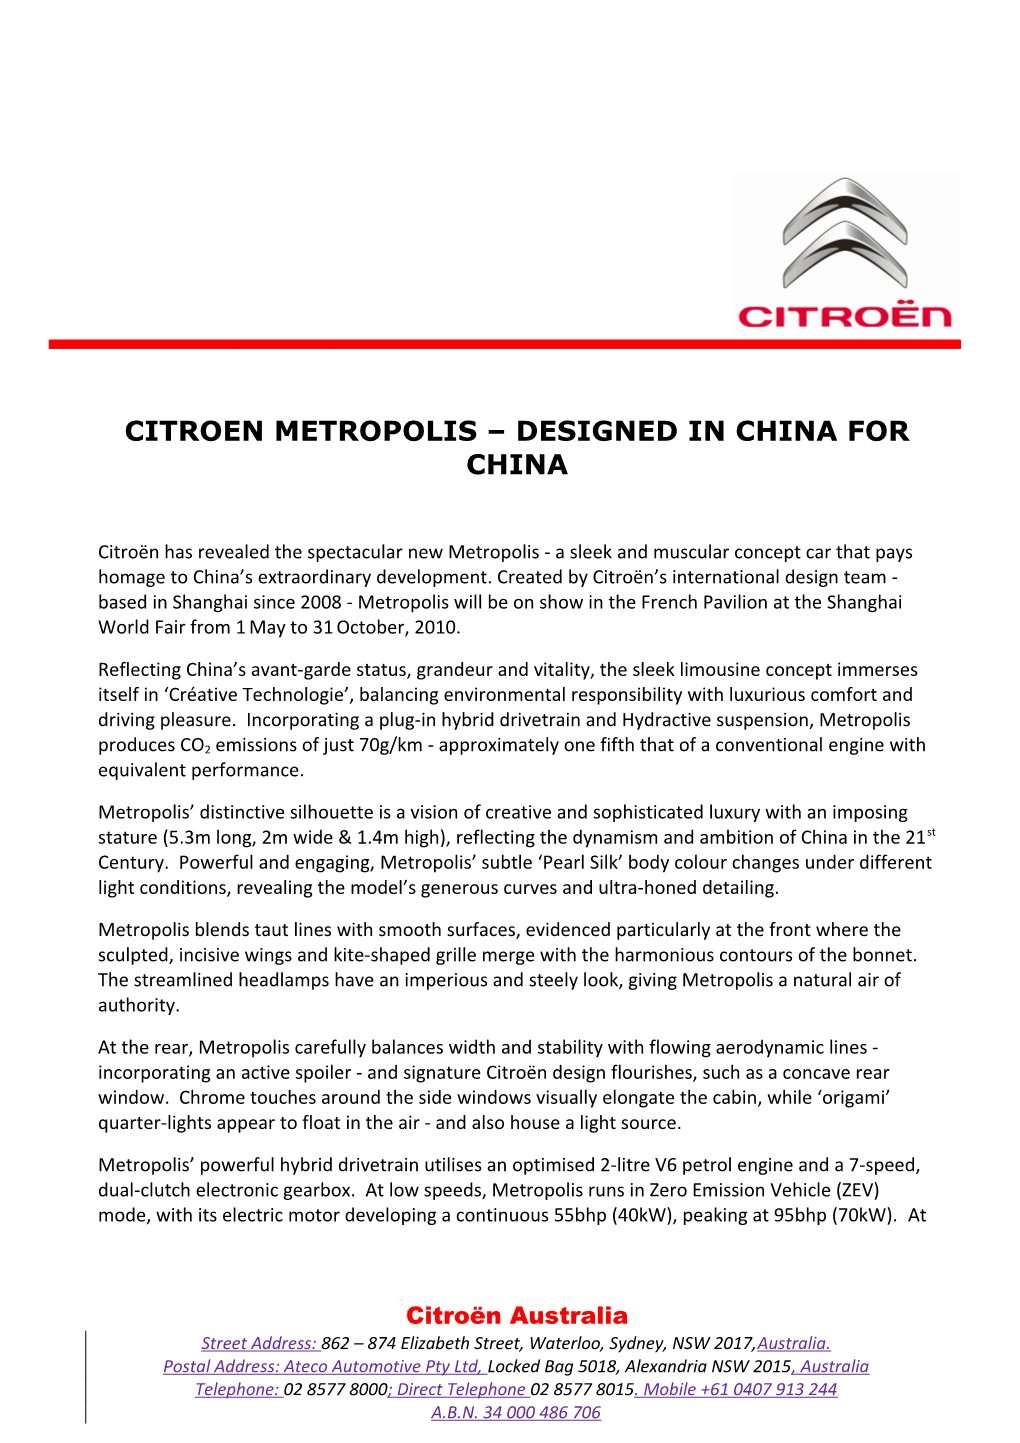 Citroen Metropolis Designed in China for China